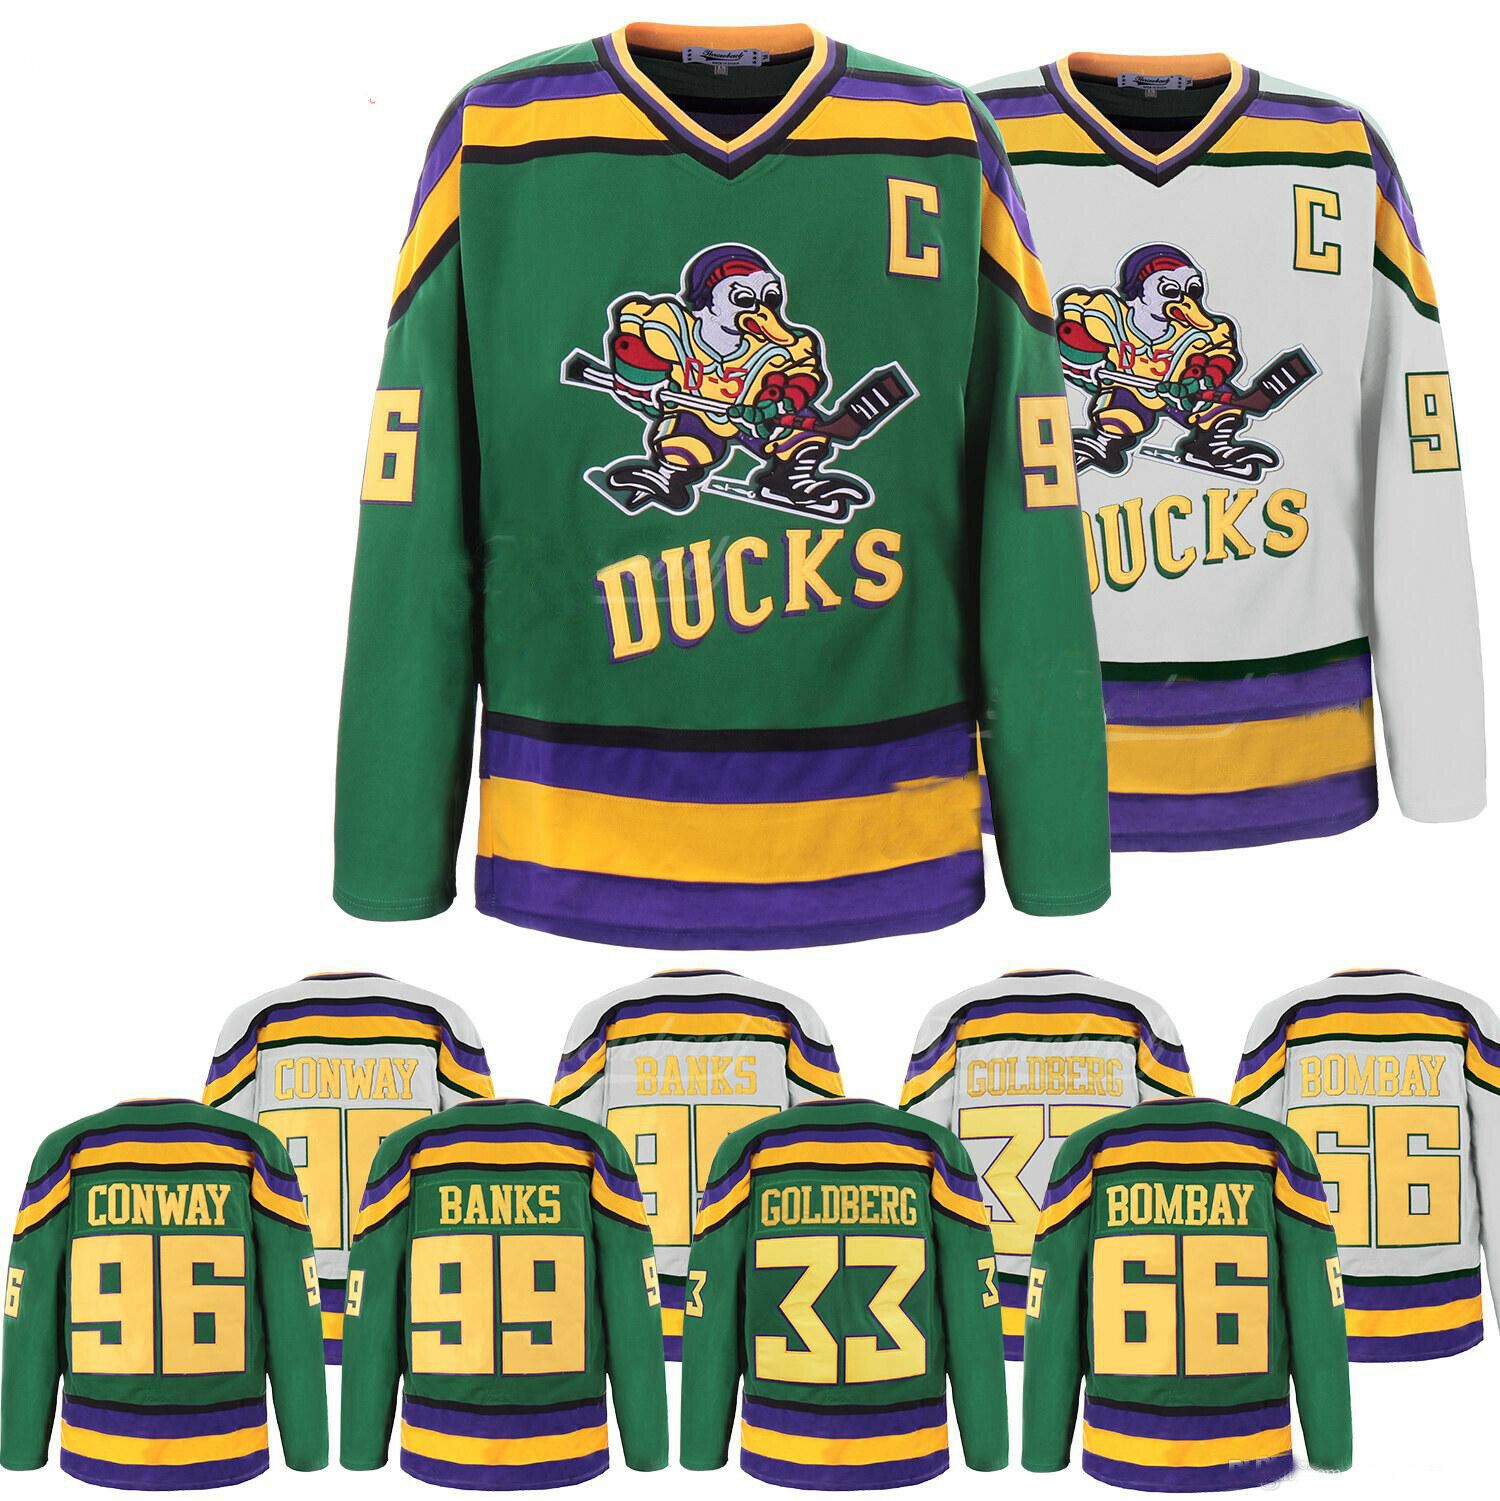 1993 mighty ducks jersey